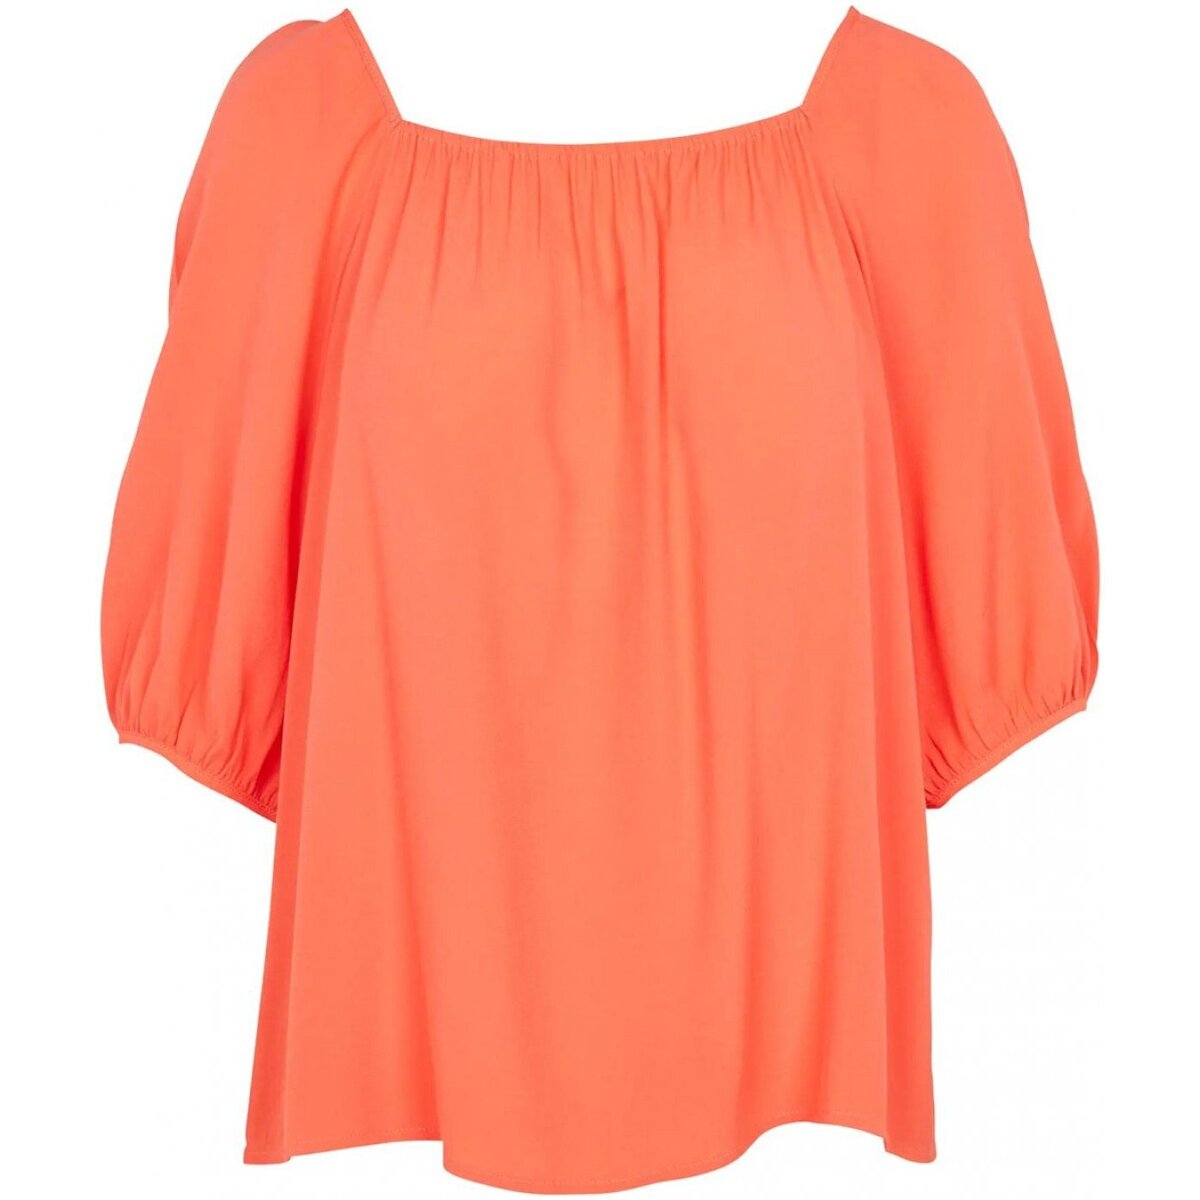 Vêtements Femme T-shirt Pour Homme Ct604 Short Sleeve Small Tip Birdseye Knit Shirt 20111195 Orange